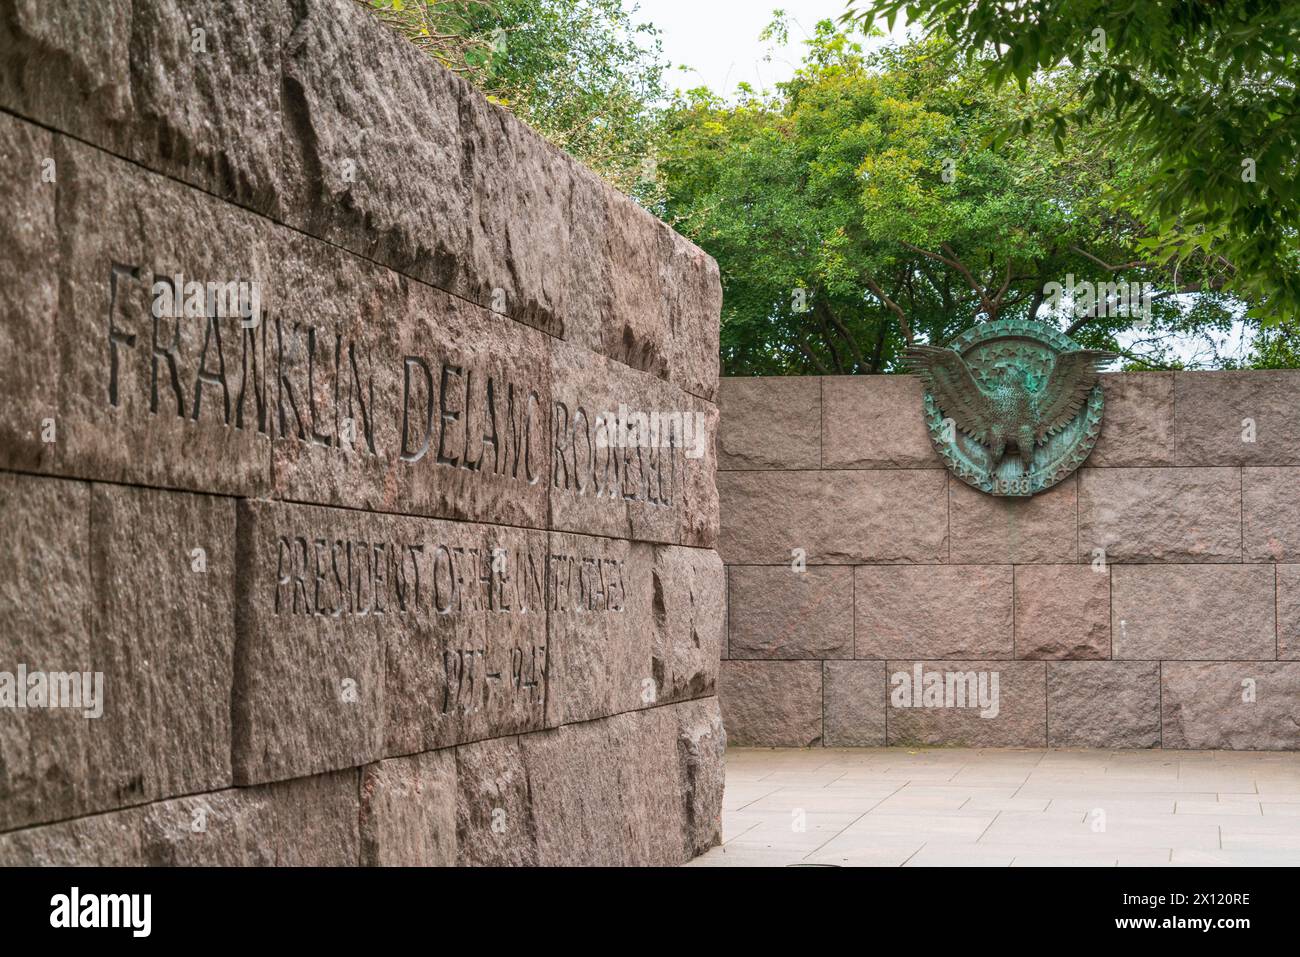 Franklin Delano Roosevelt Memorial, Presidential memorial in Washington D.C., USA Stock Photo